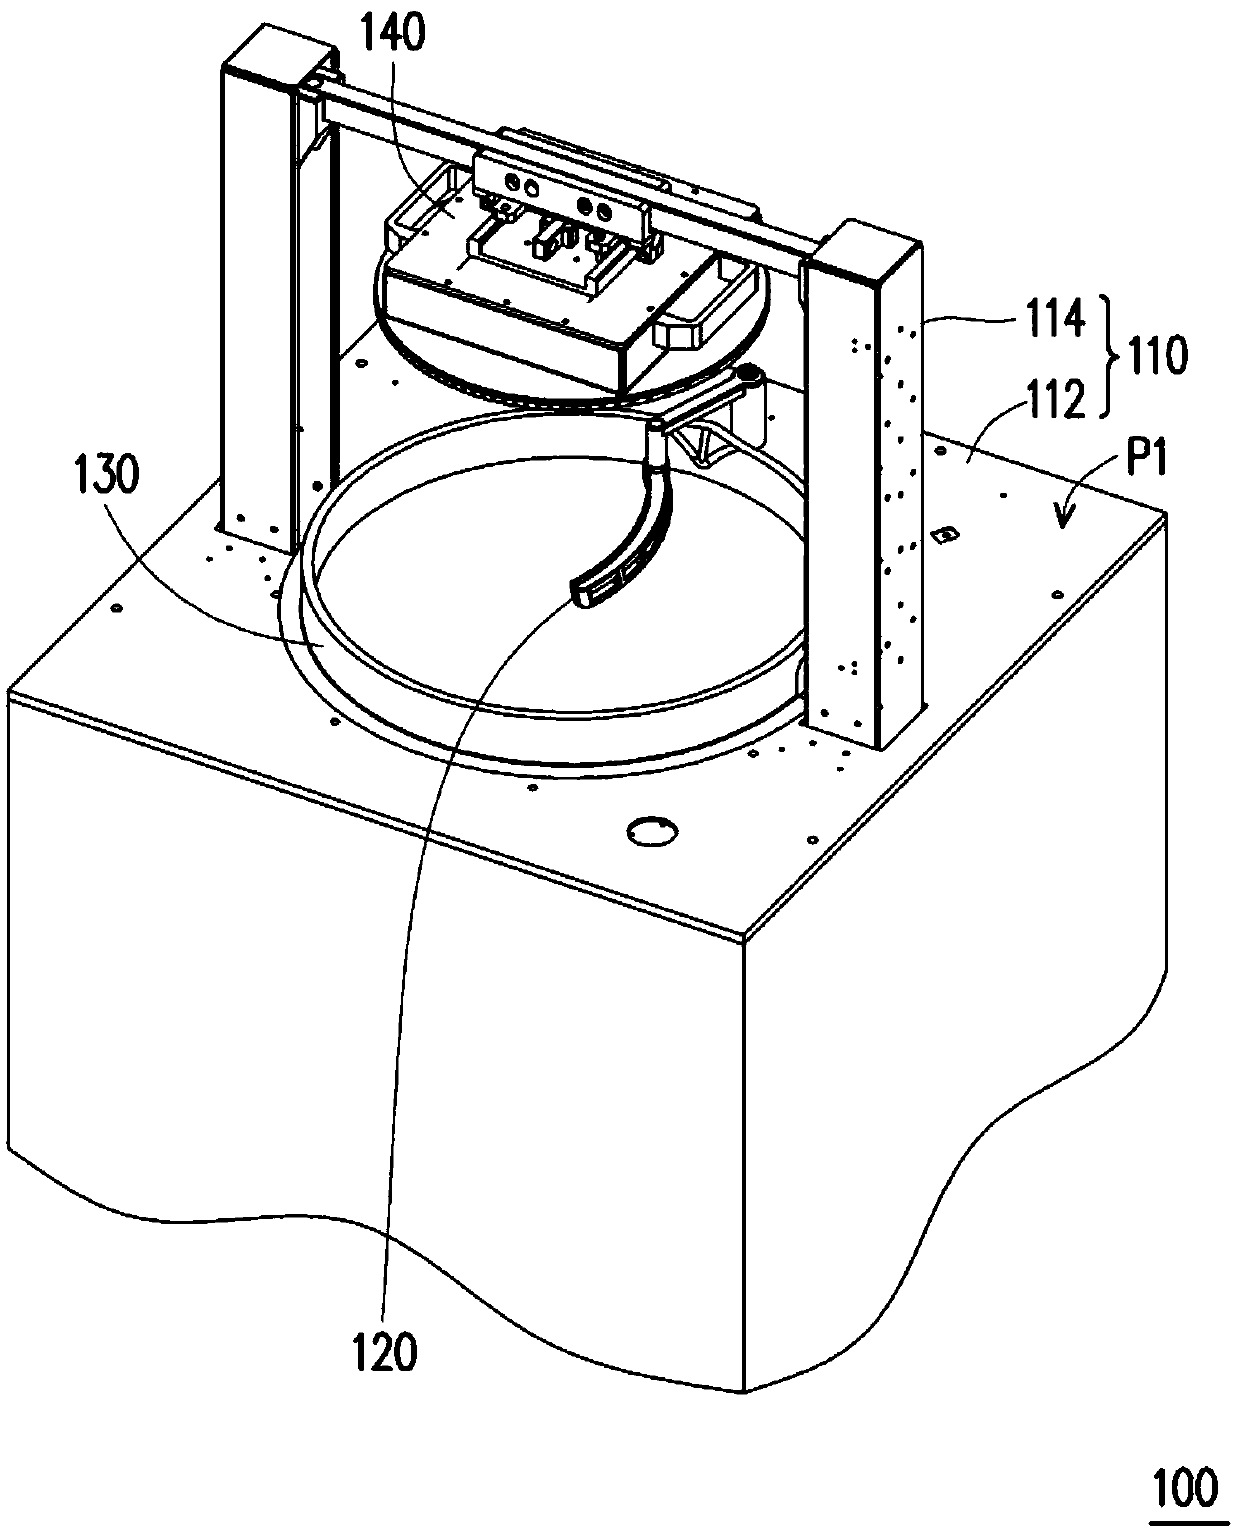 Stereoscopic printing device